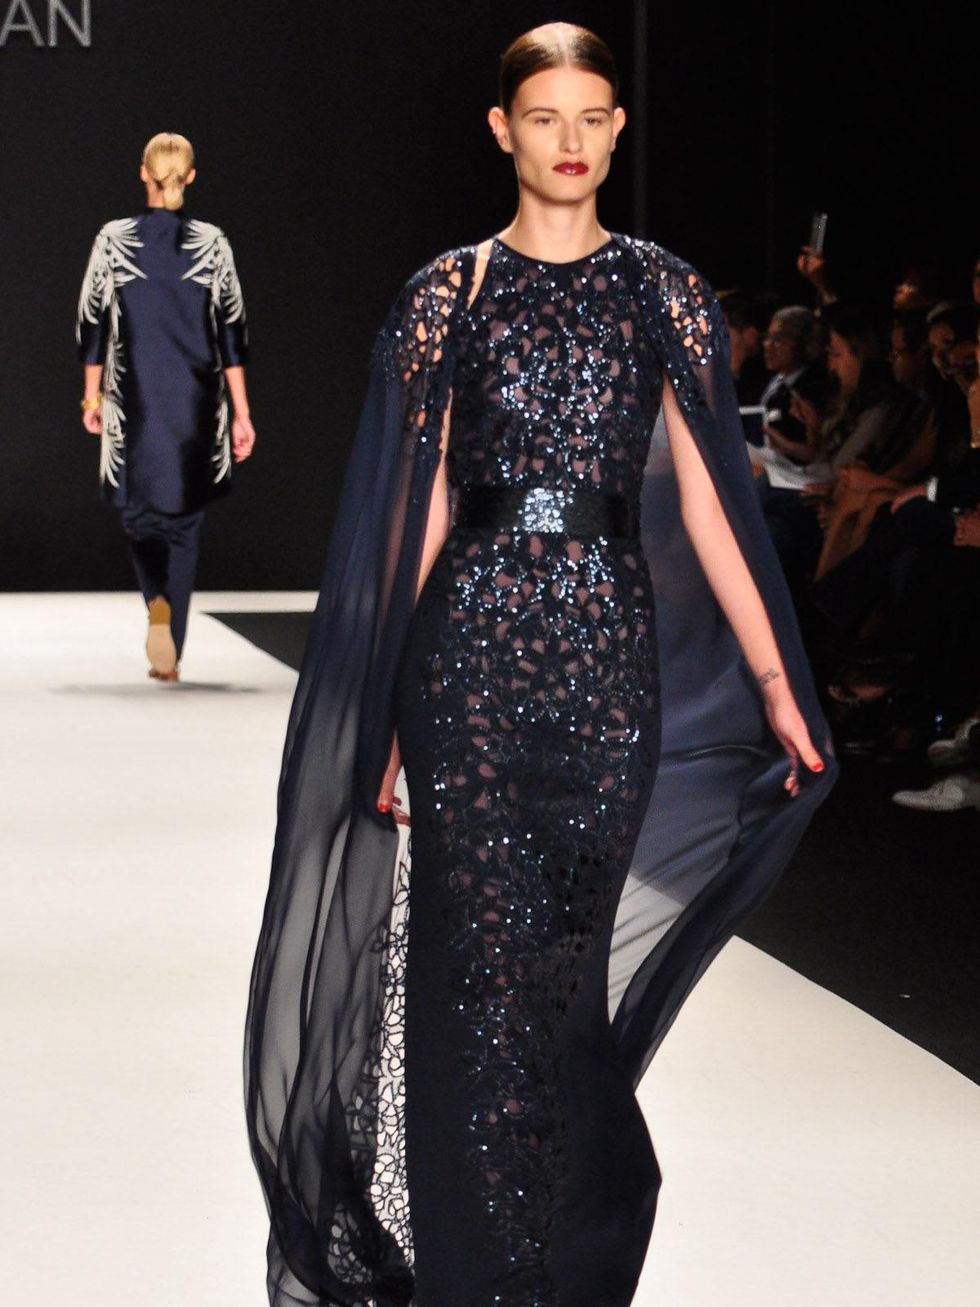 Clifford, Fashion Week spring 2013, Naeem Khan, September 2012, black gown